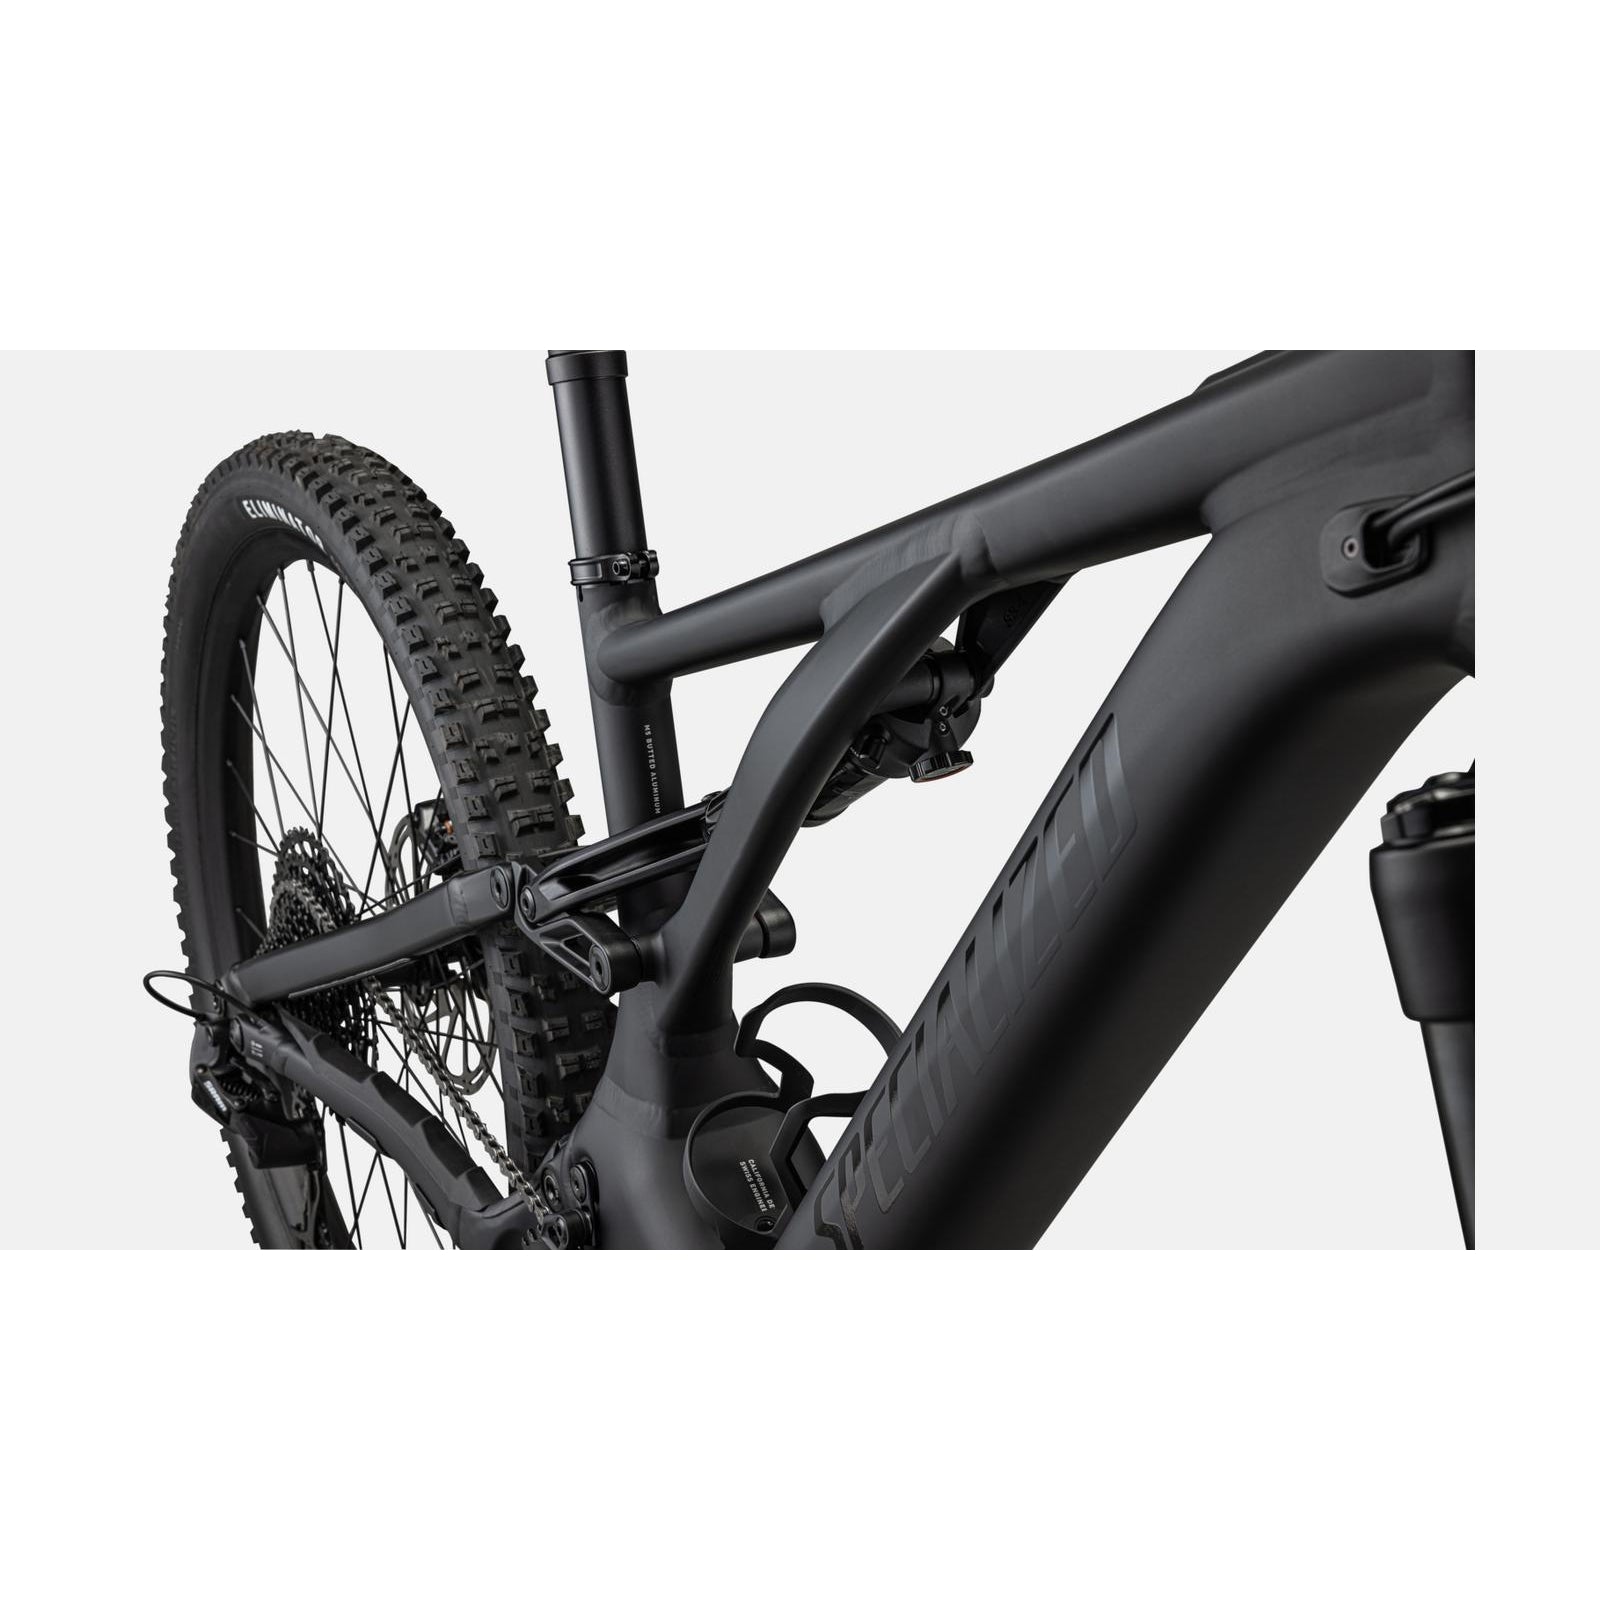 Specialized Turbo Levo Alloy Electric Mountain Bike (2022) - Bikes - Bicycle Warehouse